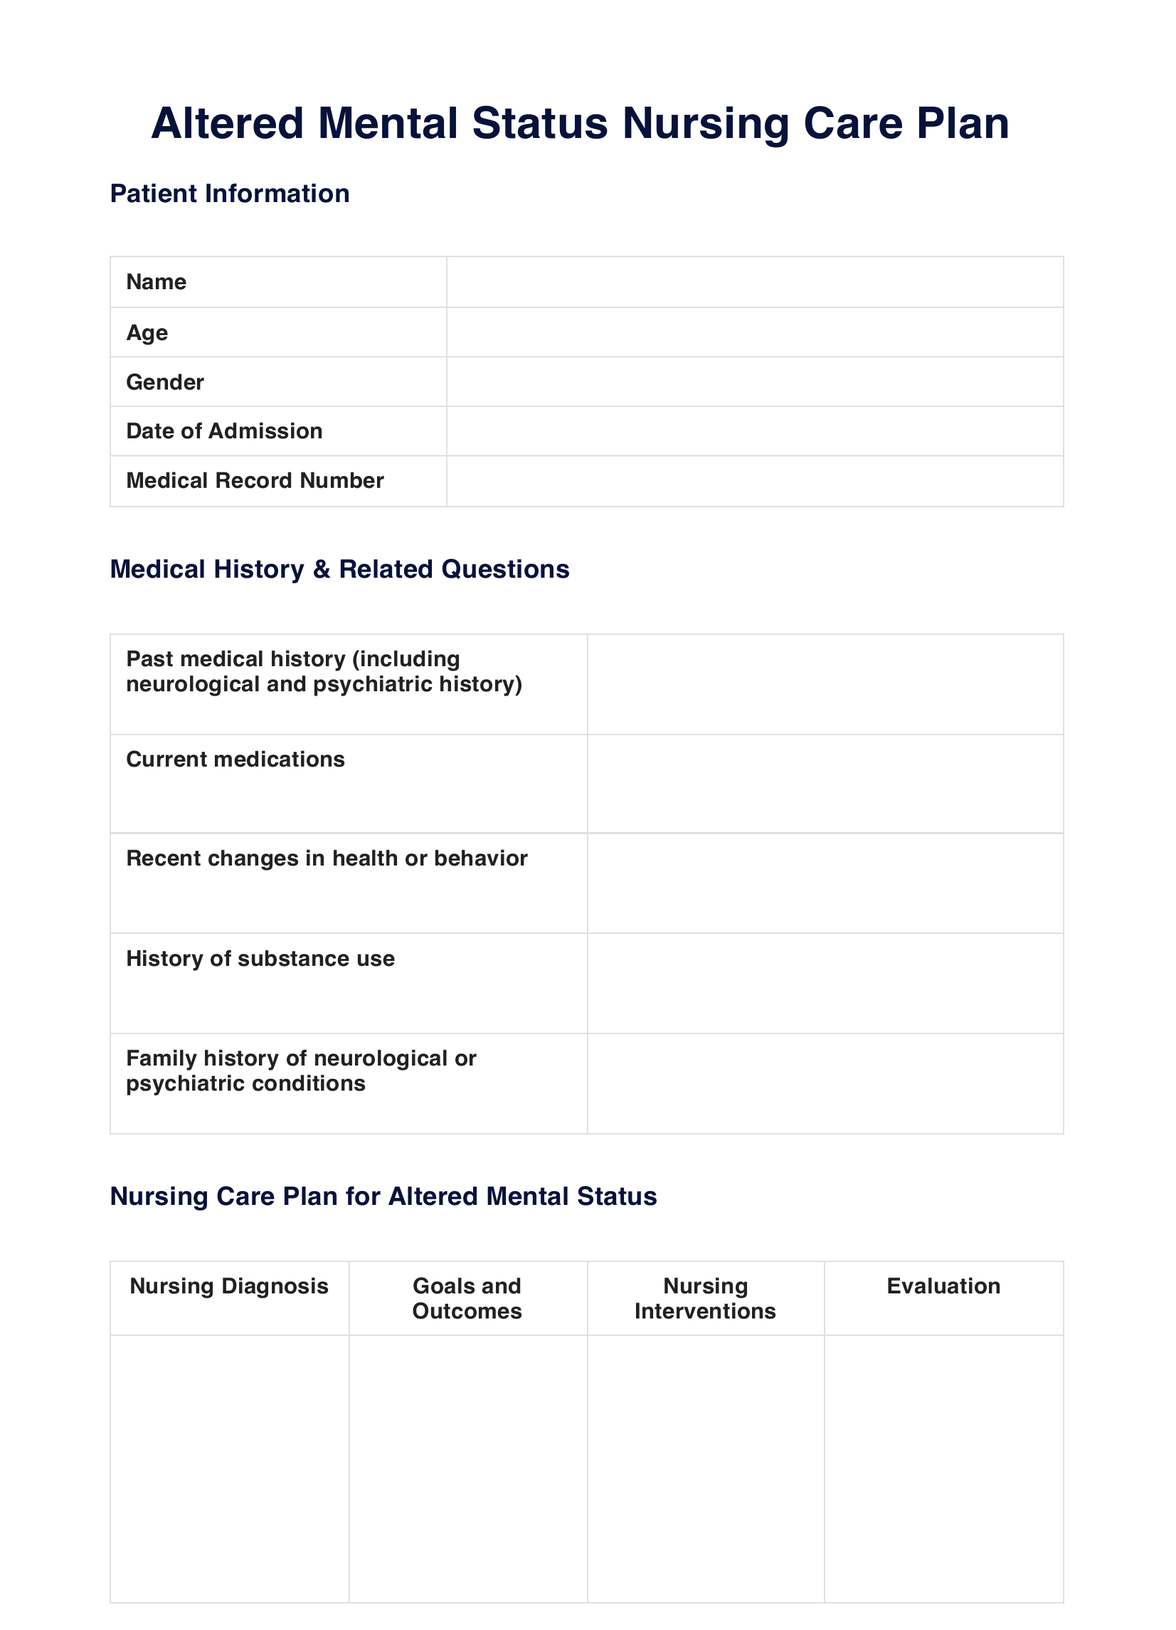 Altered Mental Status Nursing Care Plan PDF Example